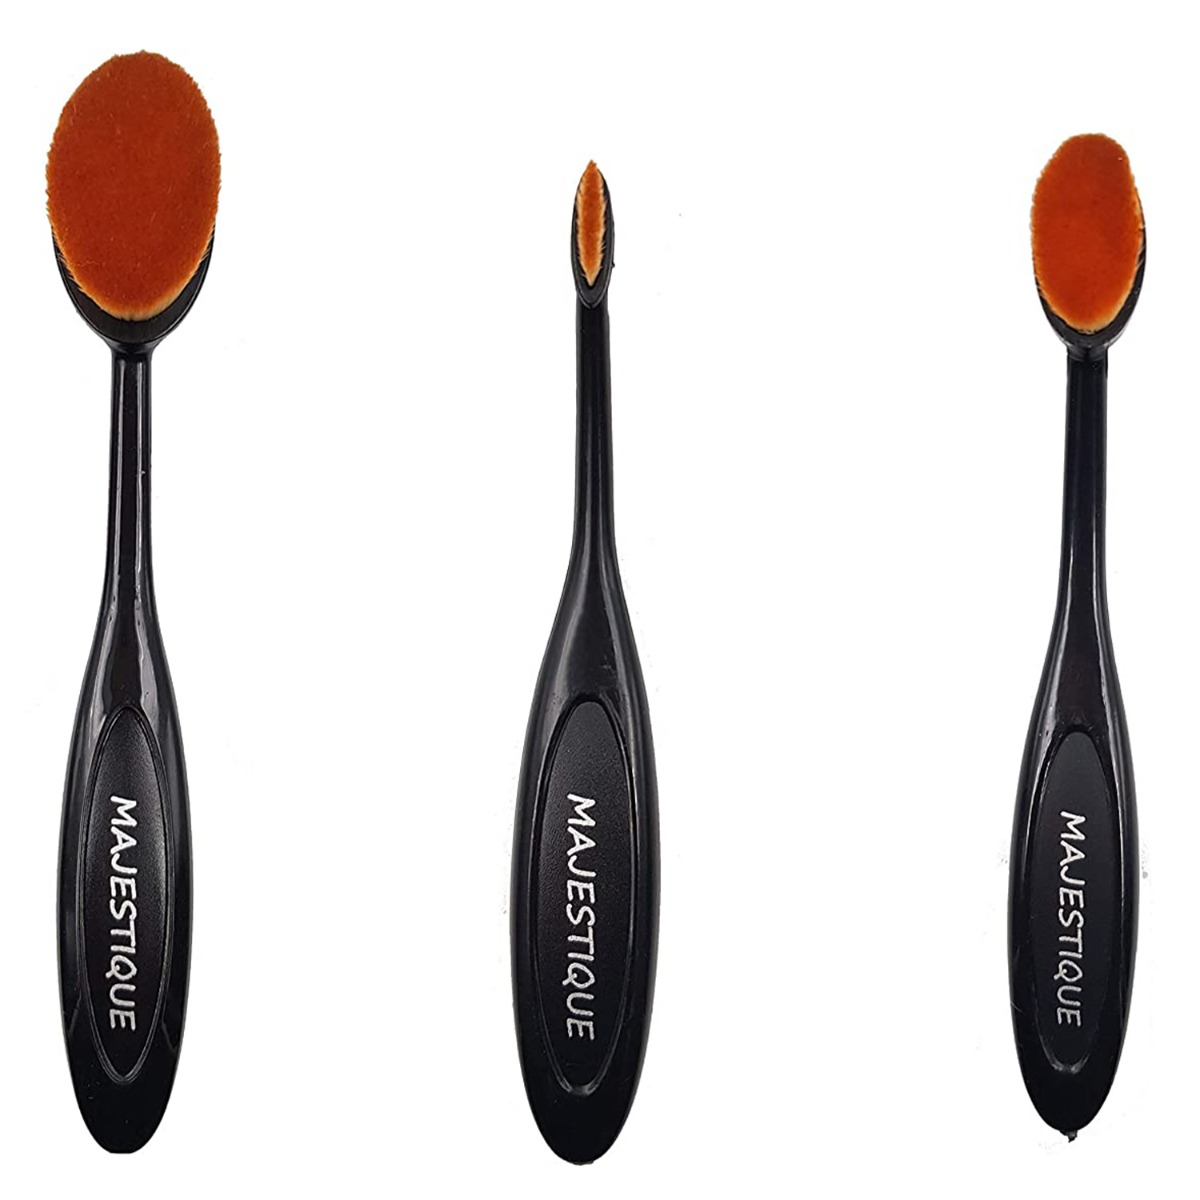 Majestique Supple Oval Makeup Brush Set Makeup Essential Brushes, Pack Of 3